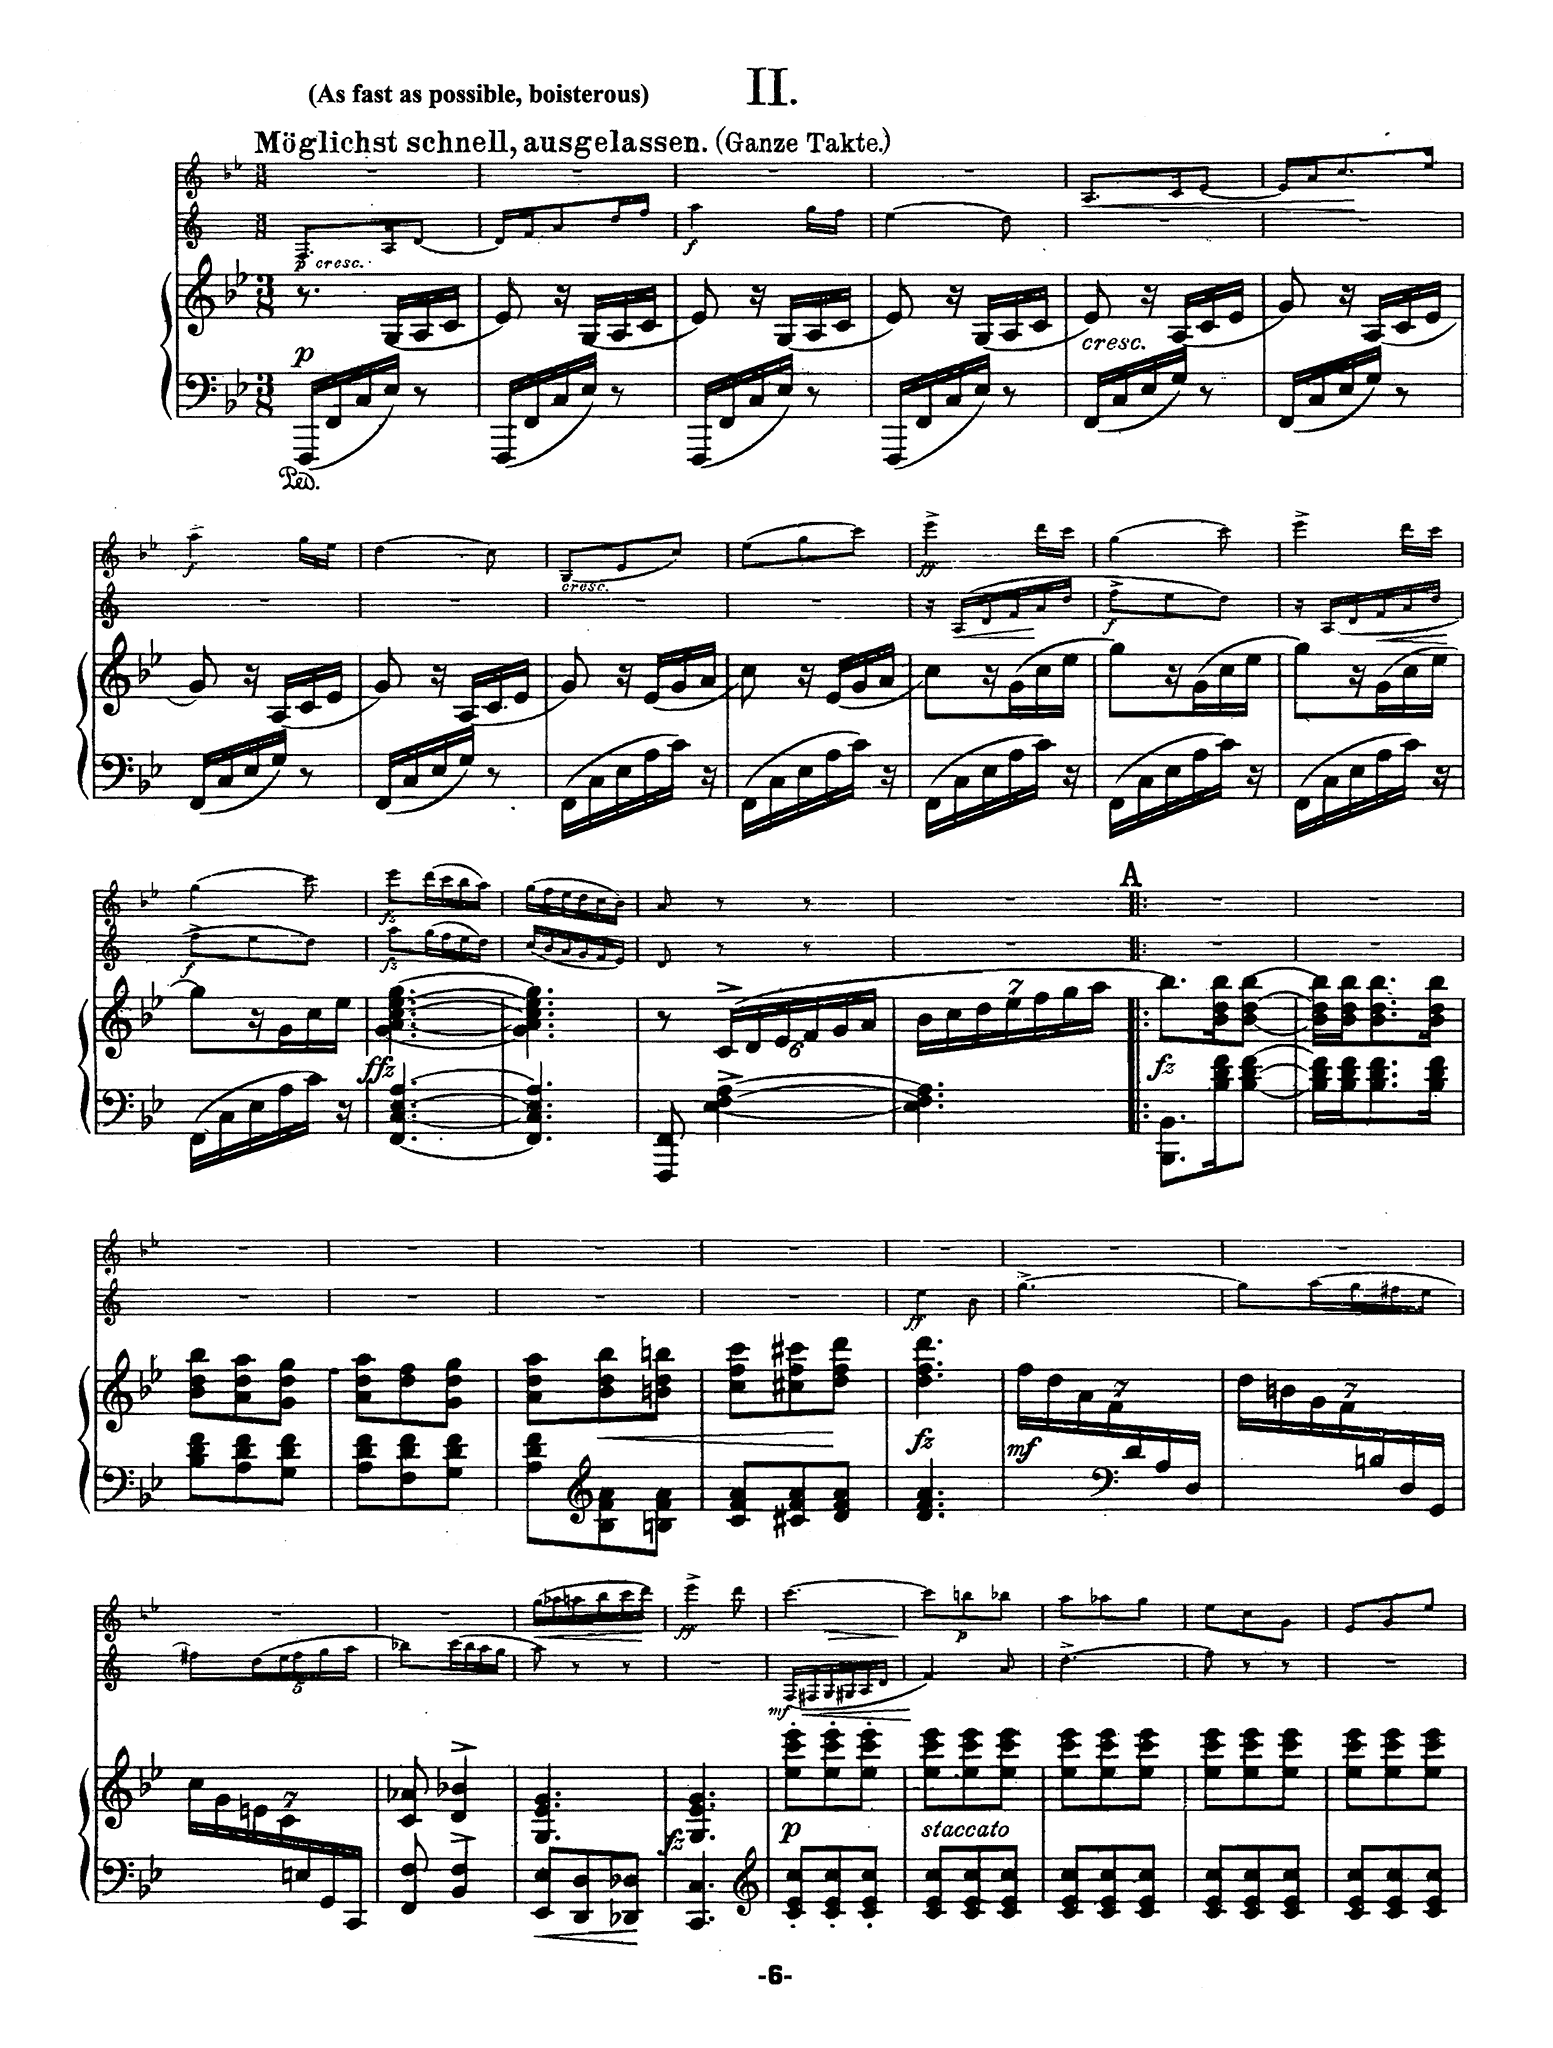 Baussnern Serenade in 4 Movements clarinet violin piano trio - Movement 2